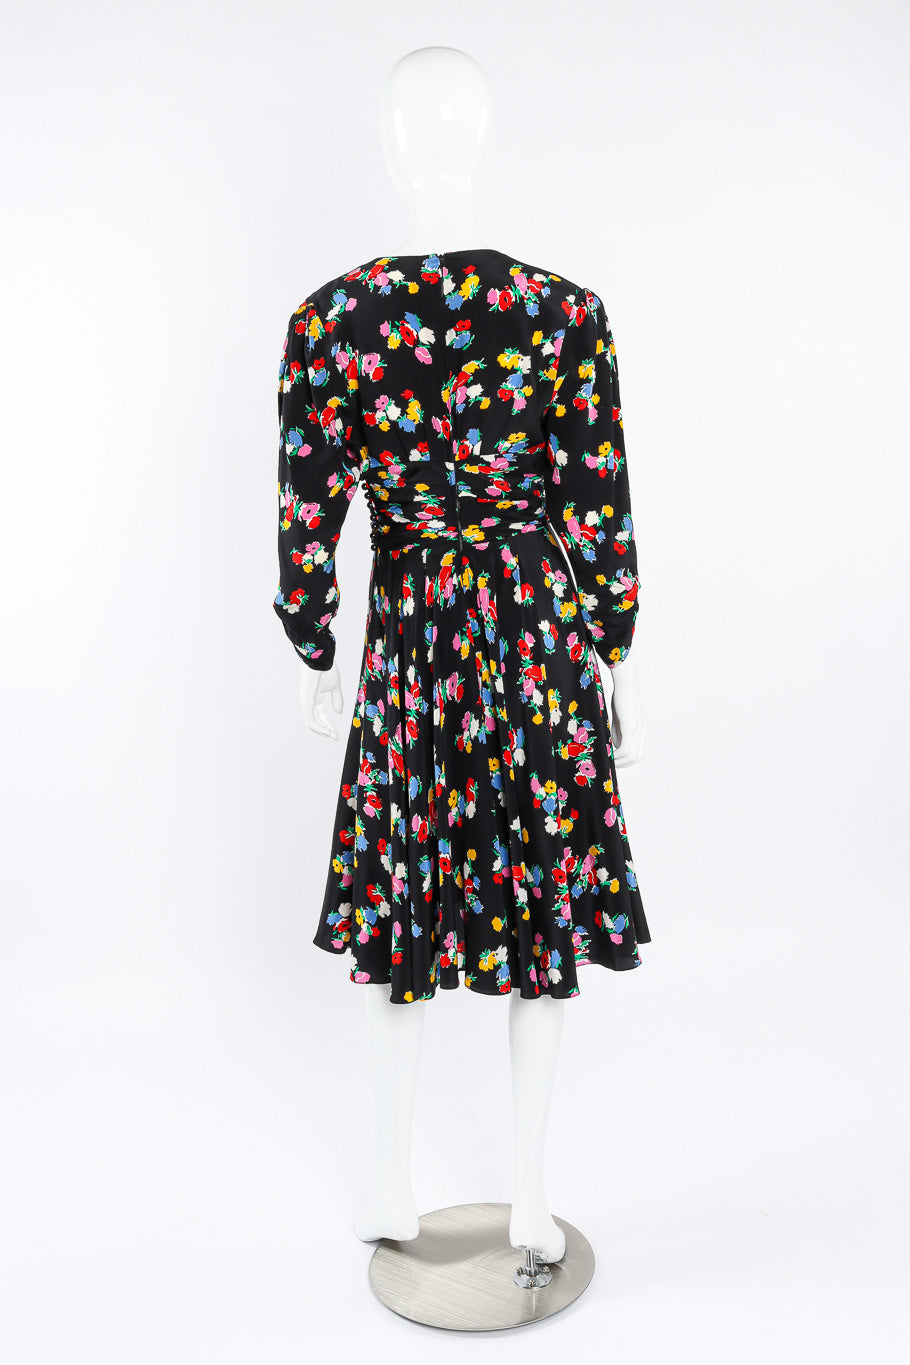 Nina Ricci silk floral print dress on mannequin @recessla